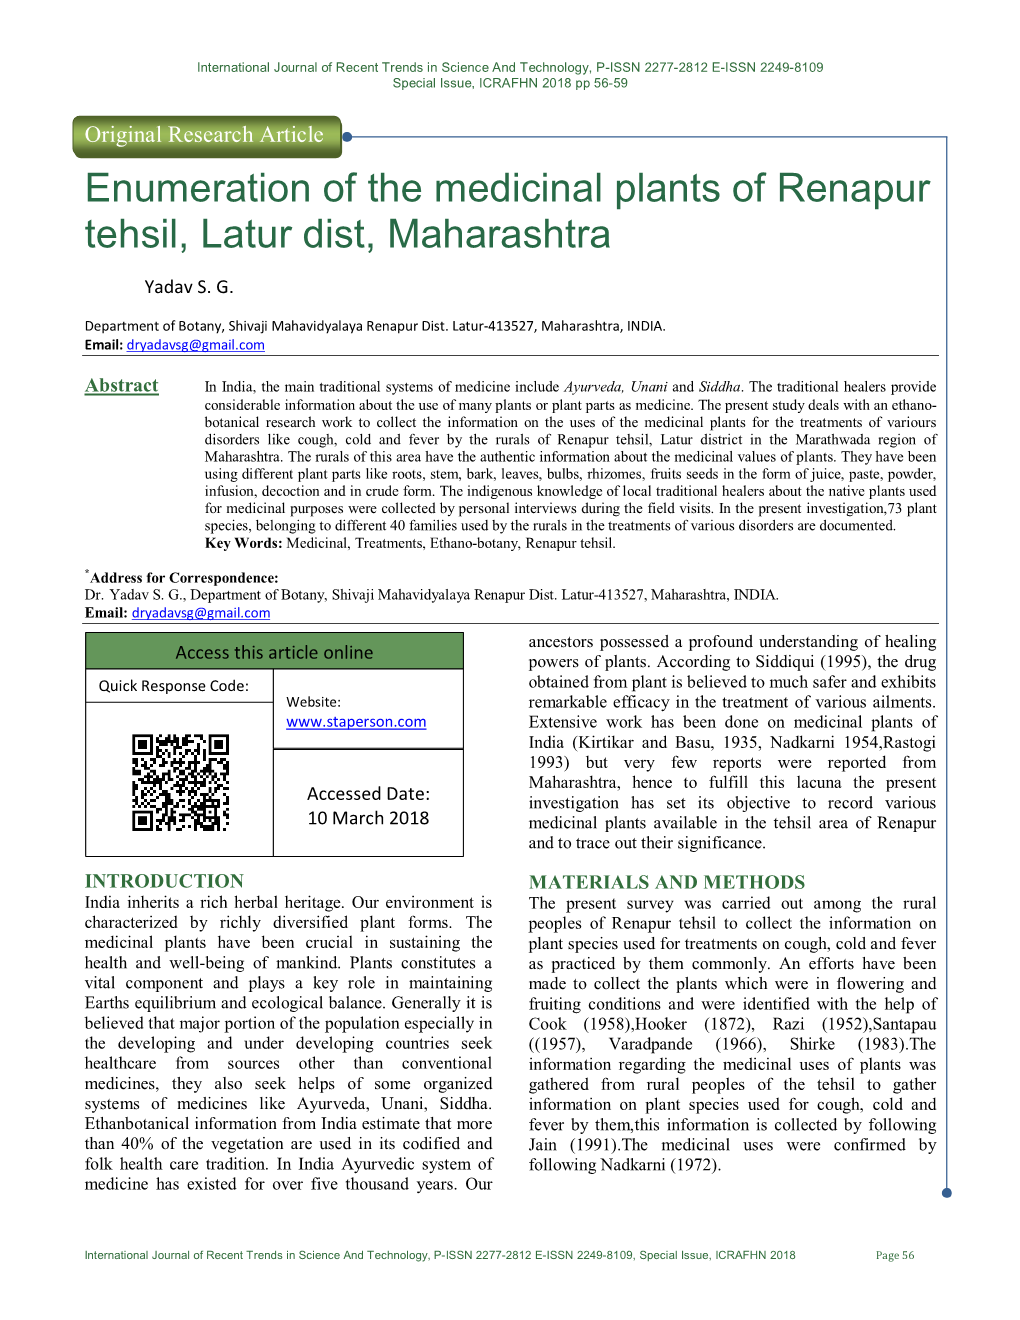 Enumeration of the Medicinal Plants of Renapur Tehsil, Latur Dist, Maharashtra